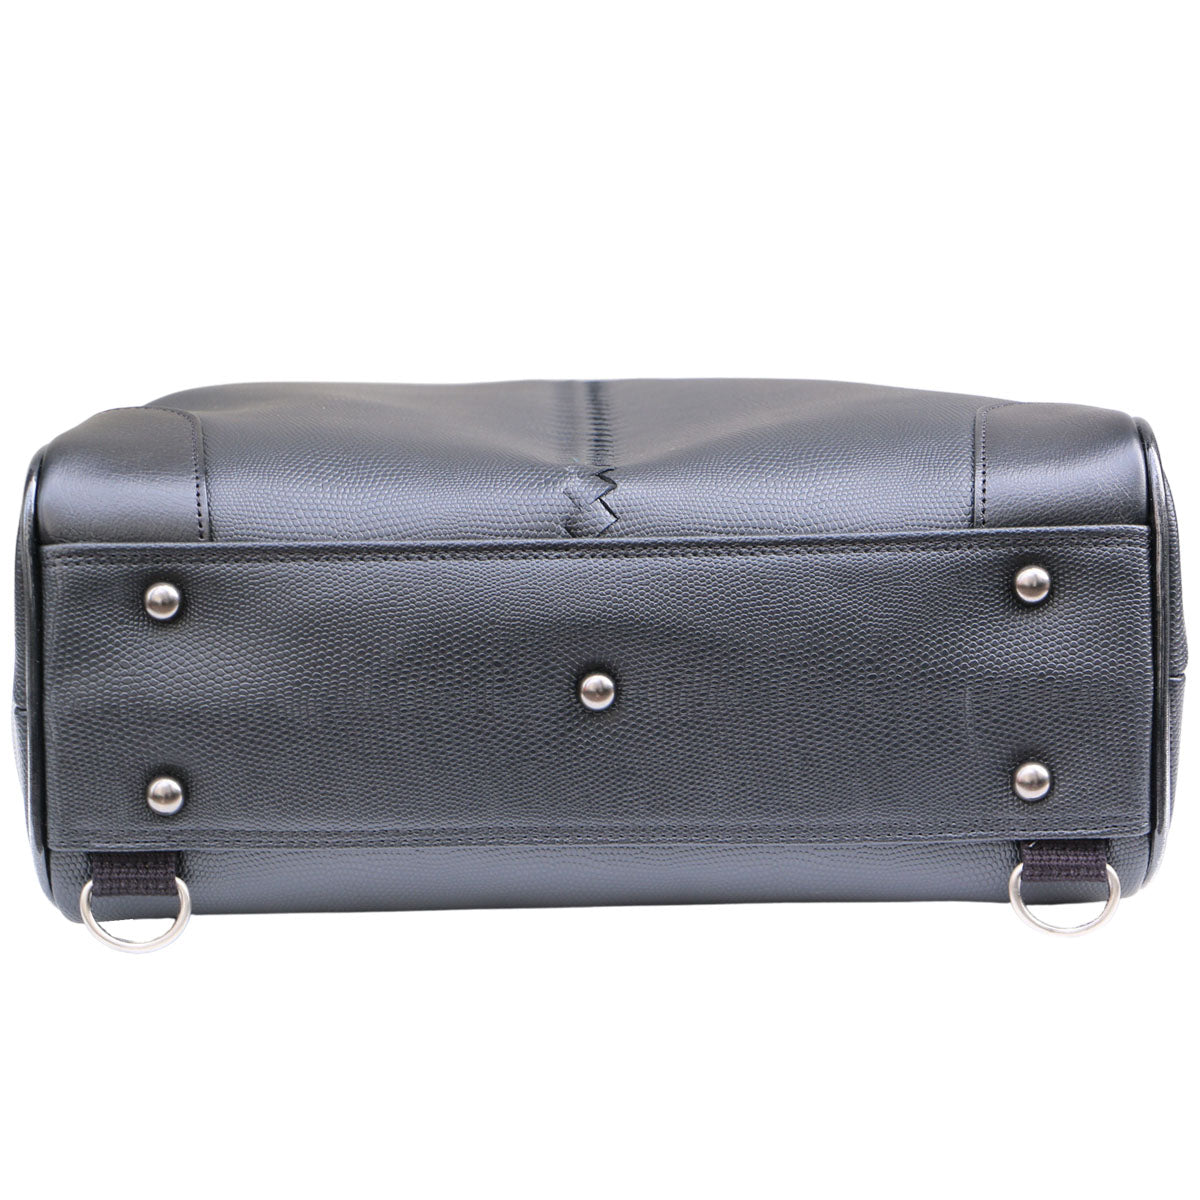 ◆Toyooka Bags Certified [Genuine Leather Handle SET] Dulles Bag Toyooka Bags L Size YK3 [LIZARD] Navy